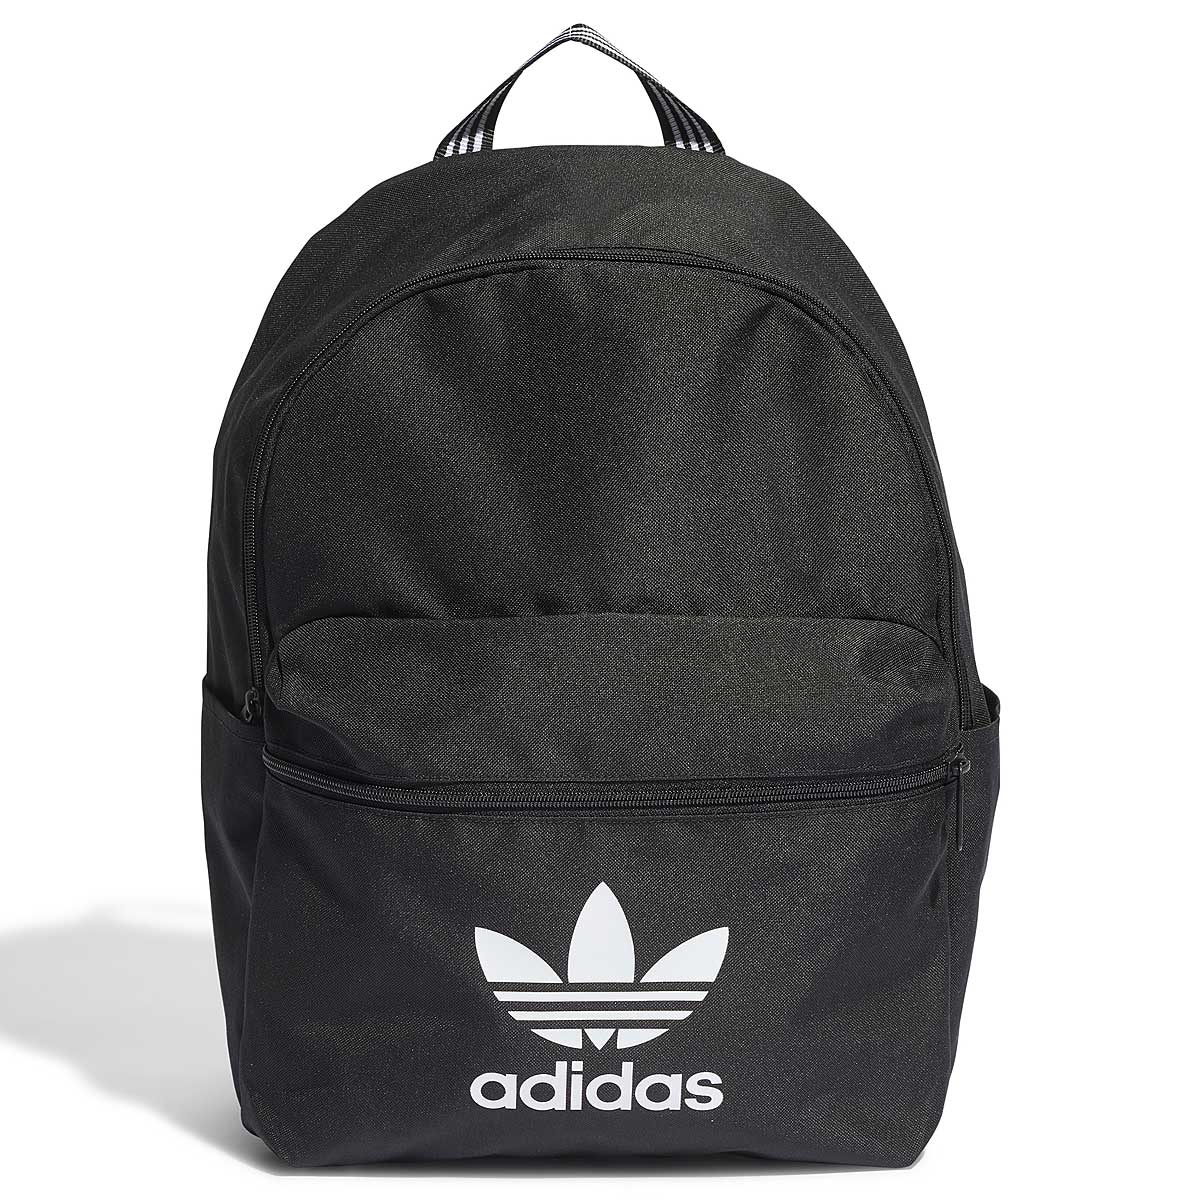 Image of Adidas Adicolor Backpack, Black